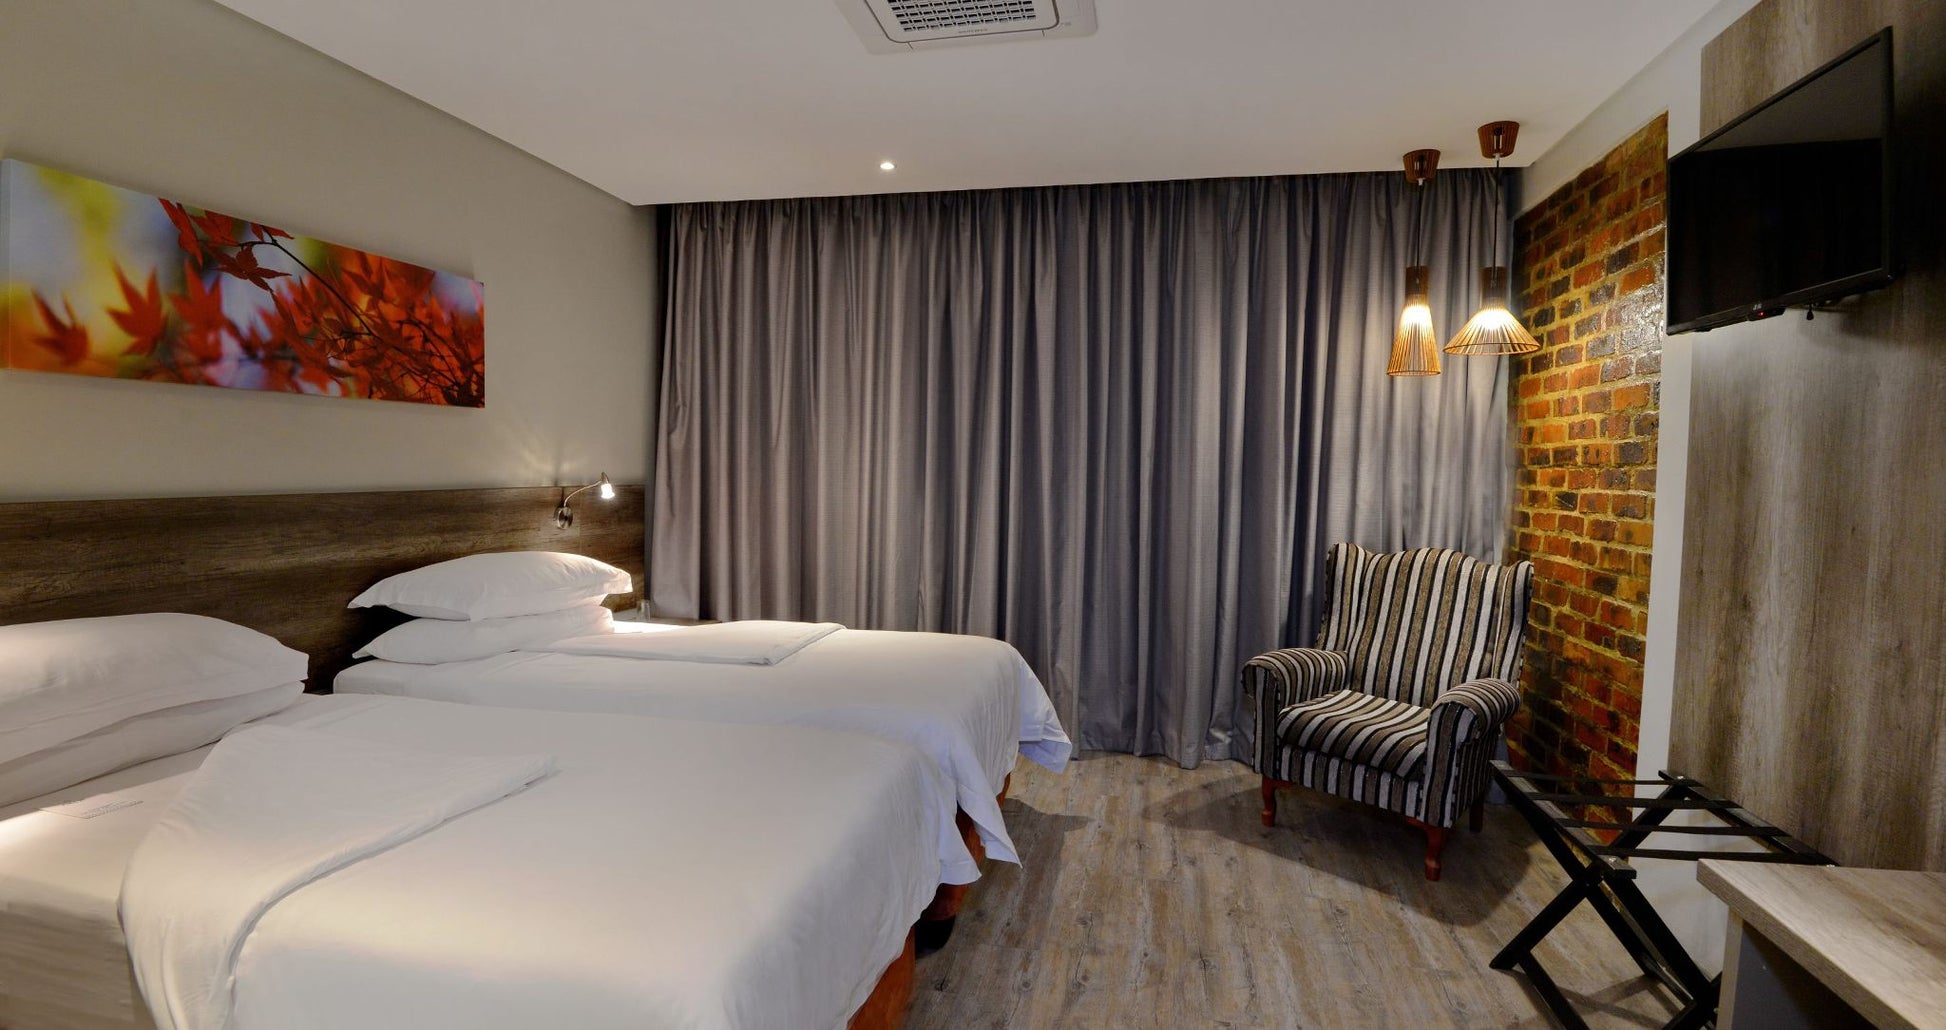 Vulintaba Country Hotel And Spa Newcastle Kwazulu Natal South Africa Bedroom